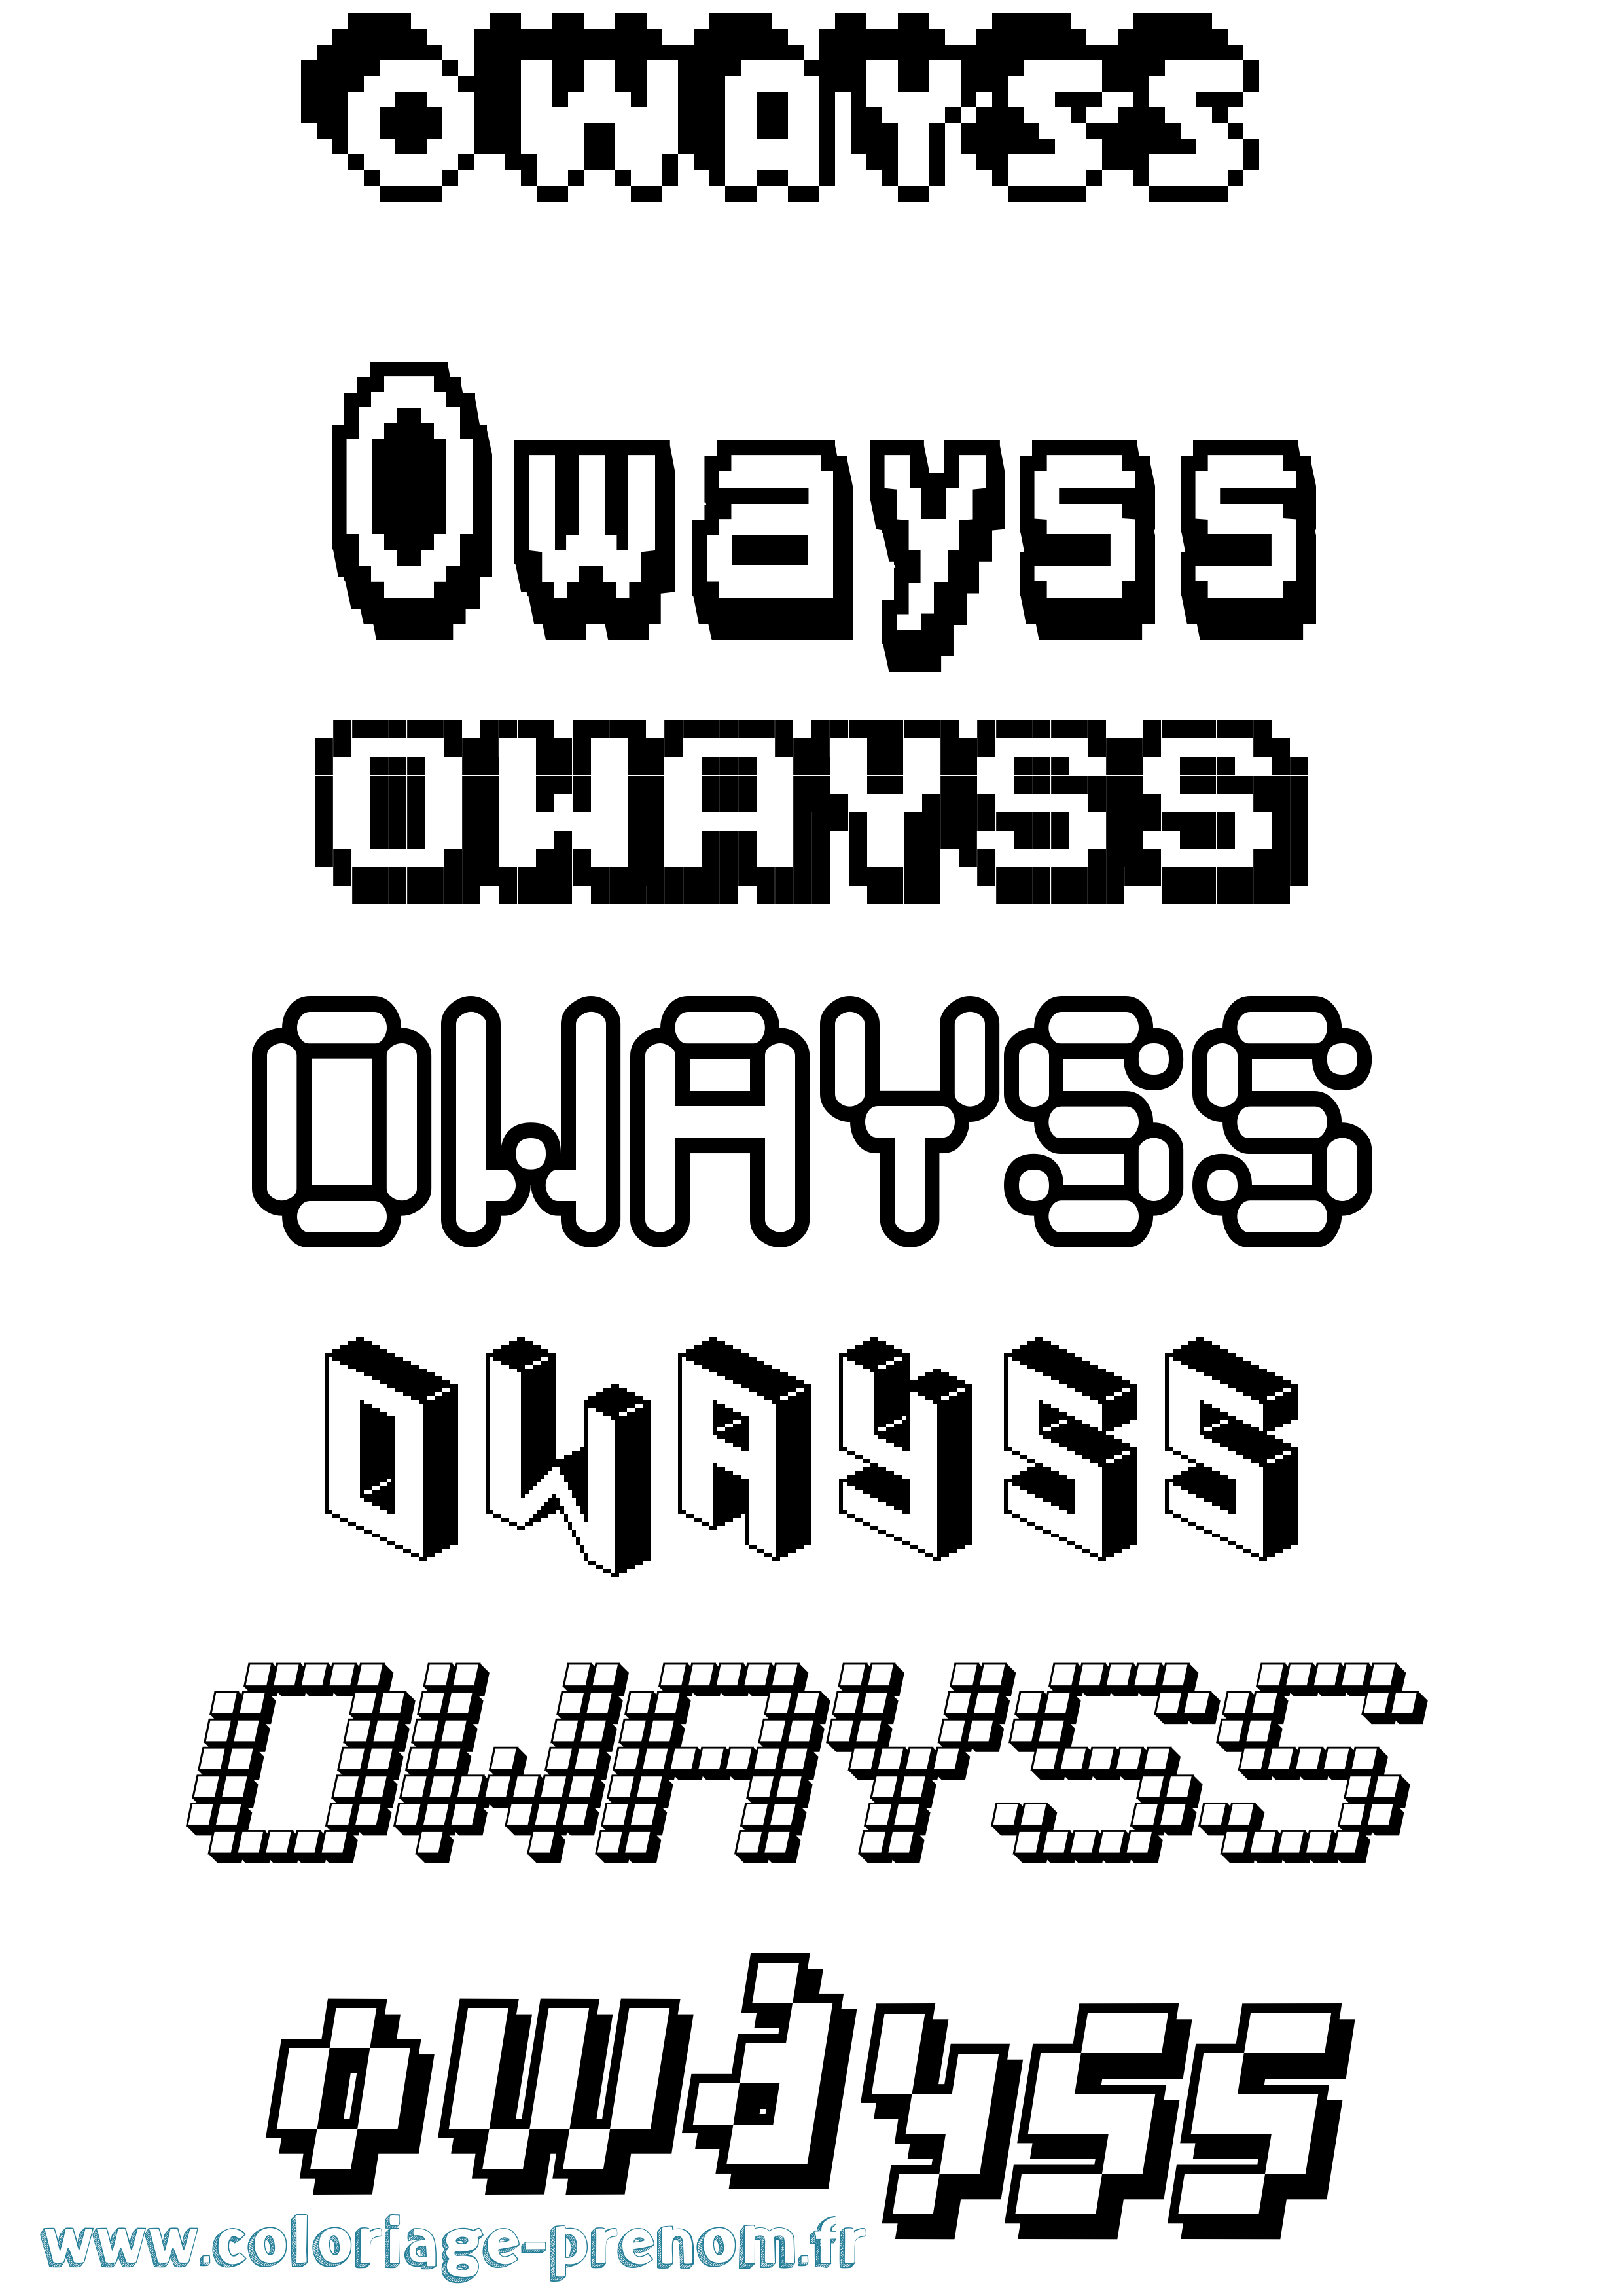 Coloriage prénom Owayss Pixel